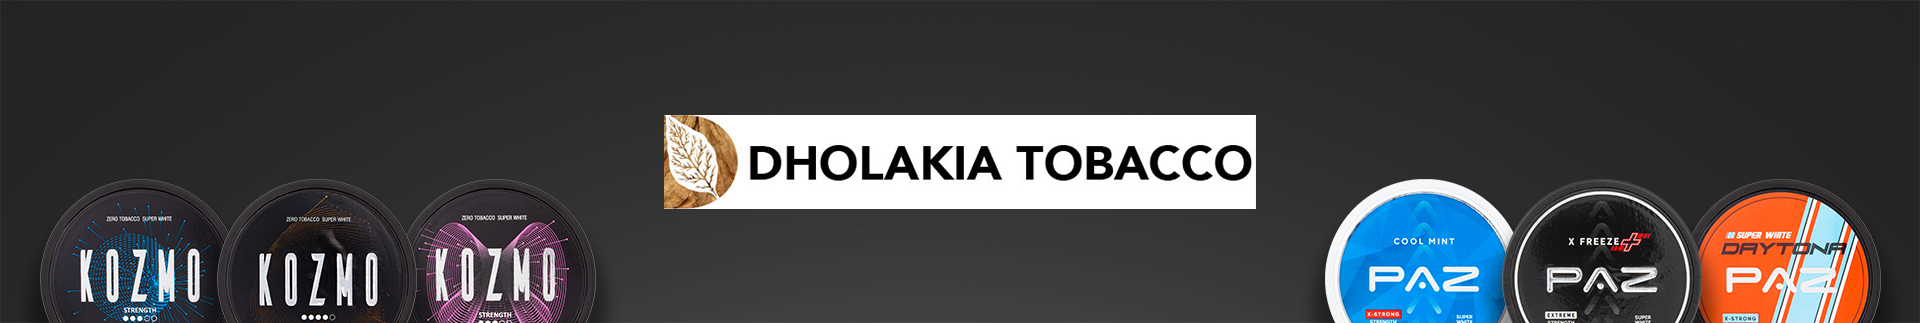 Dholakia Tobacco